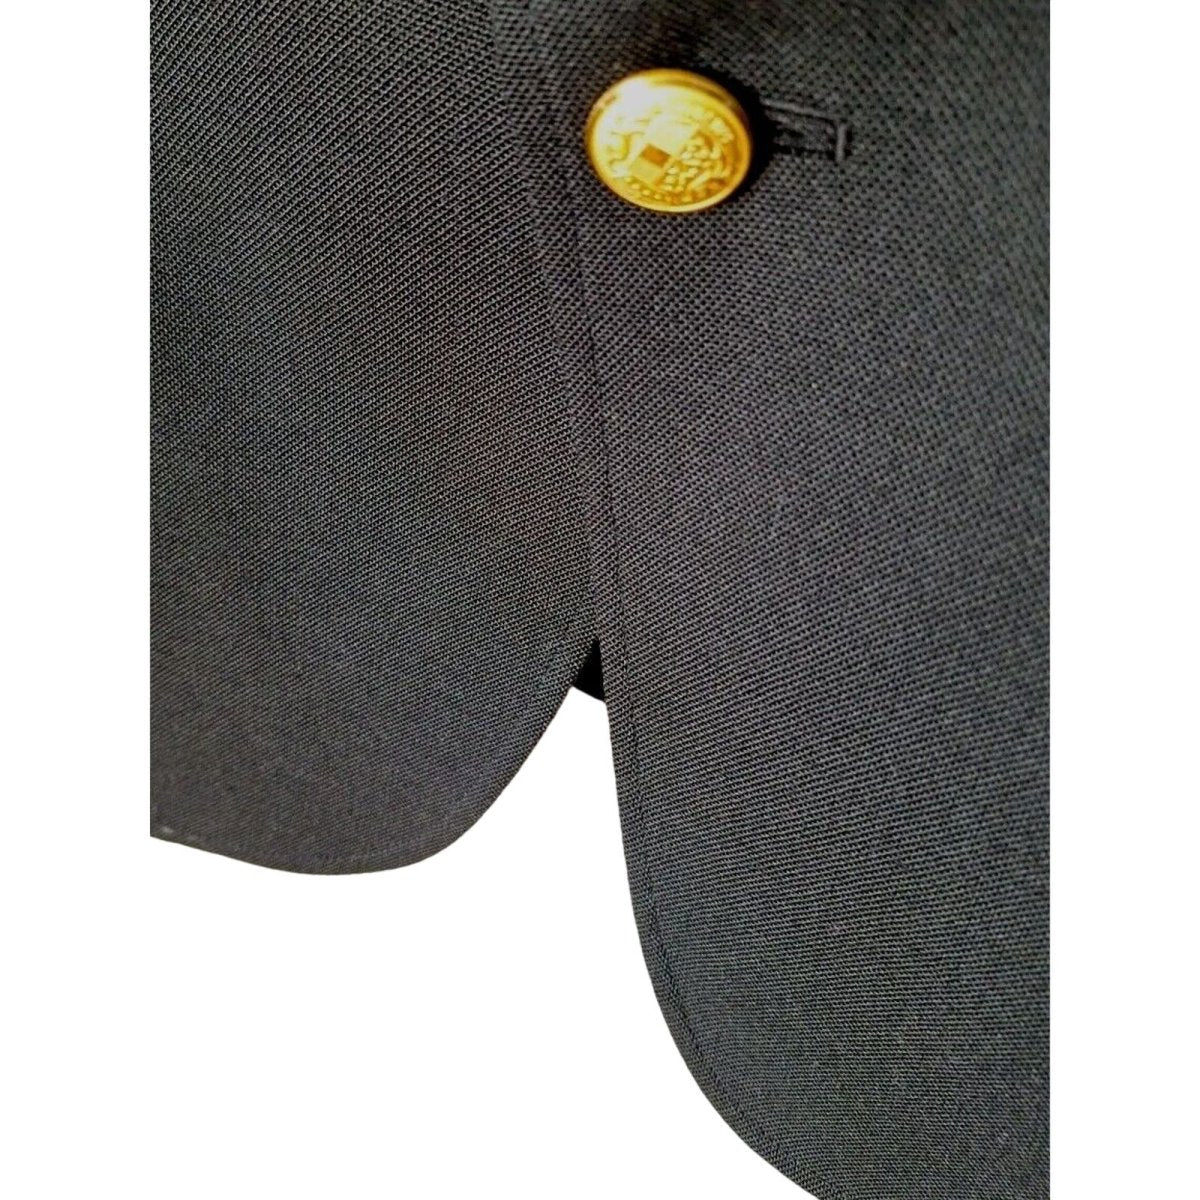 Vintage 70s Garrison Park Black Gold Button Blazer Men Size 40-41 Short - themallvintage The Mall Vintage